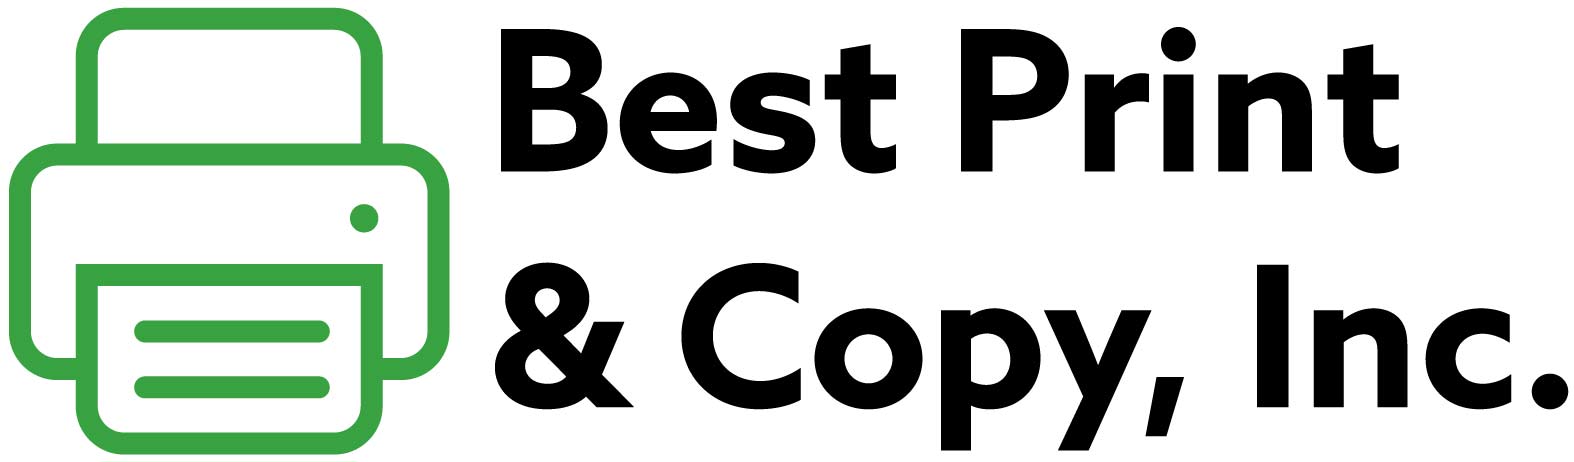 Best Printing Logo - Customer Reviews | Best Print and Copy, Inc.